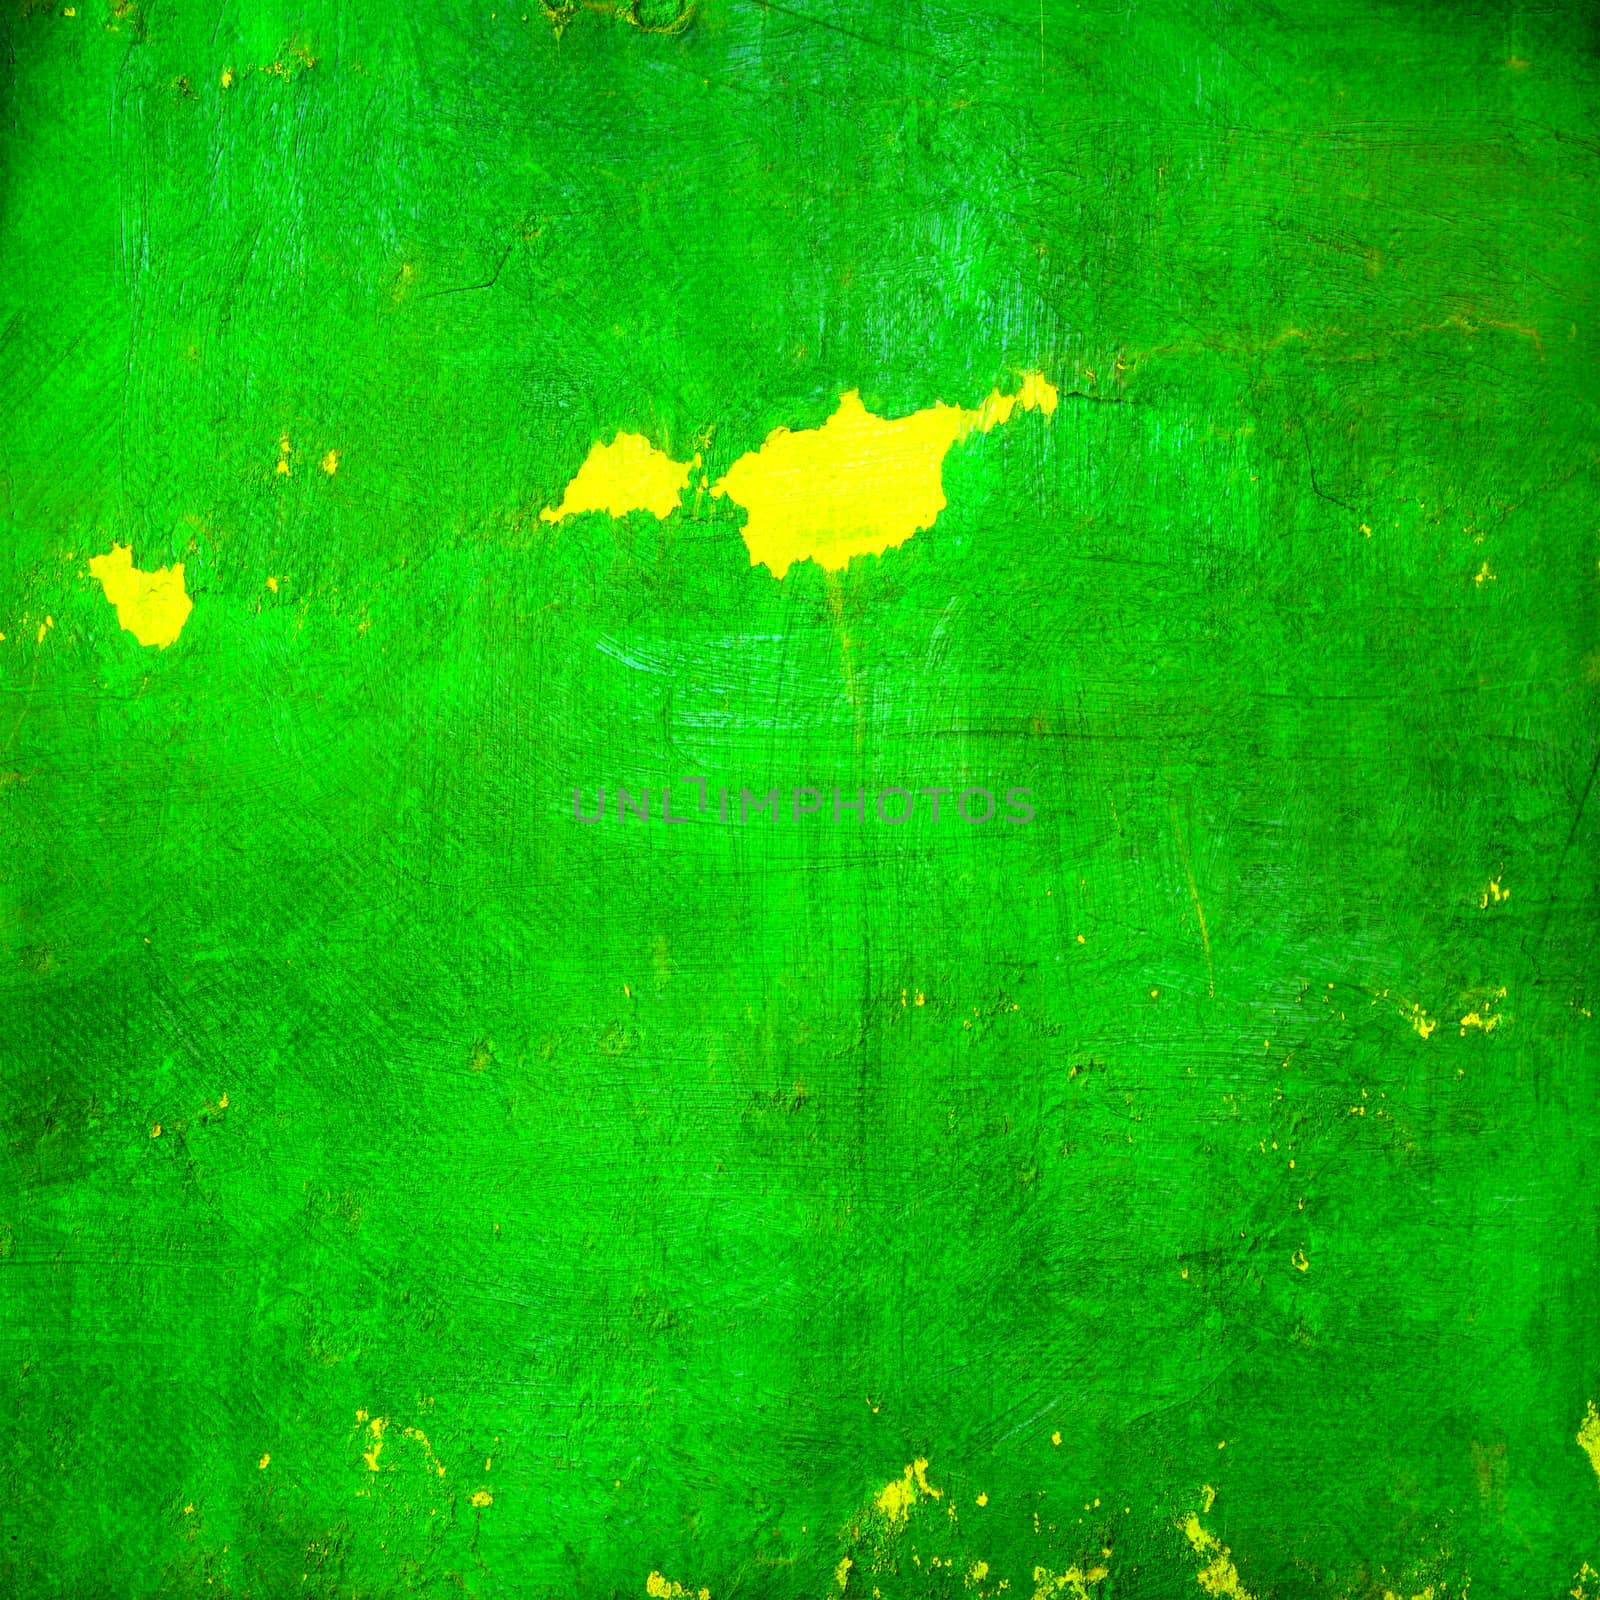 Grunge green wall by wyoosumran